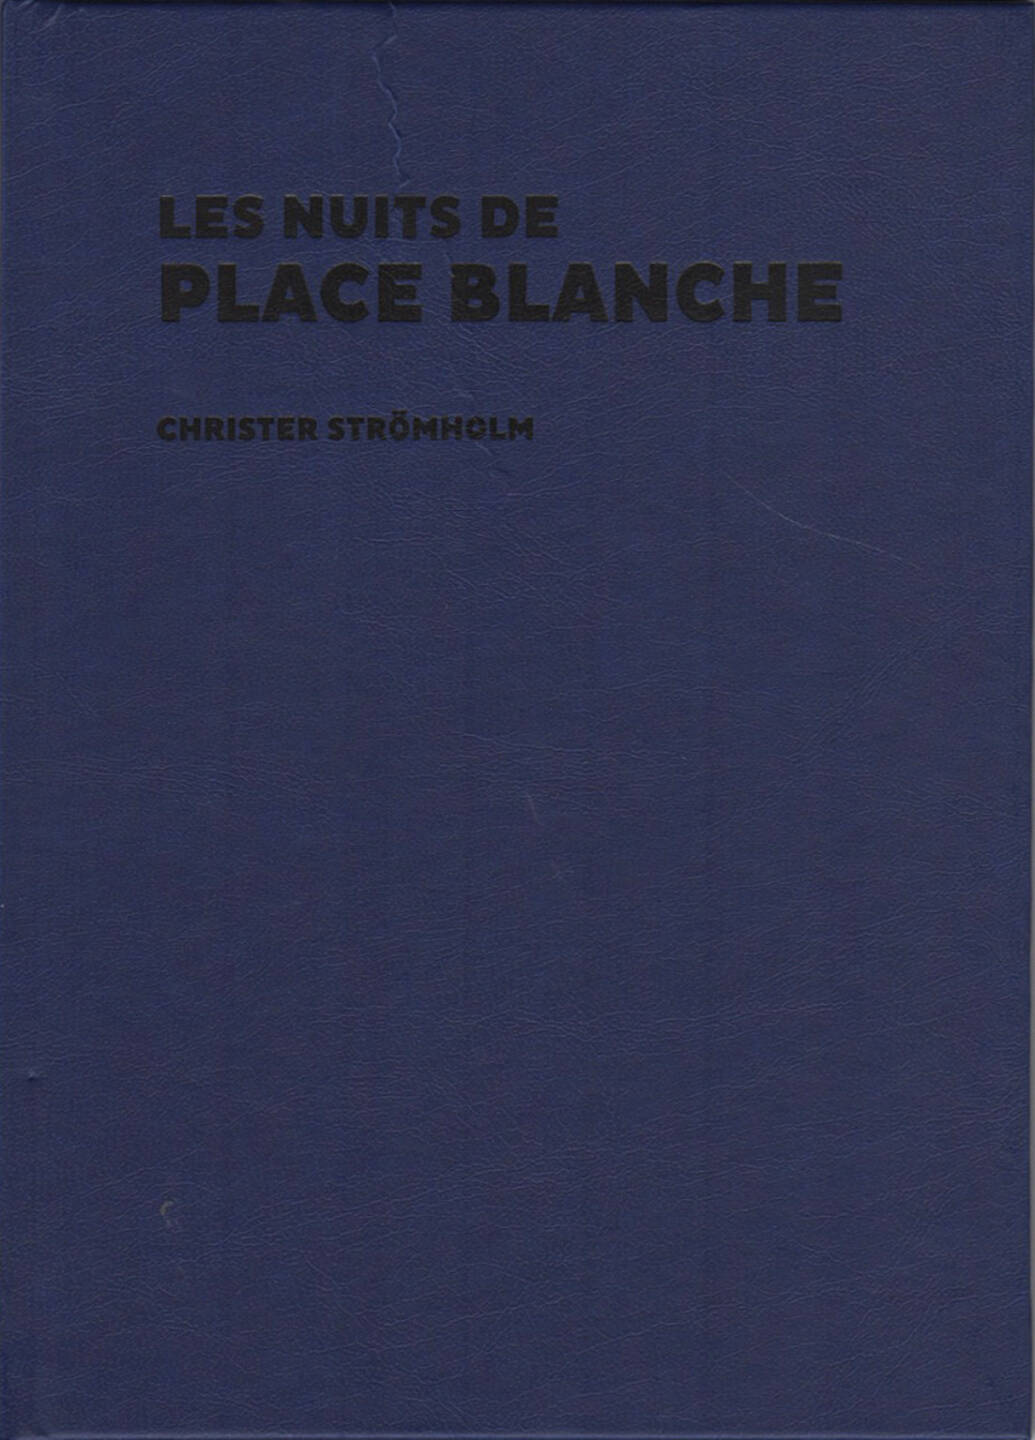 Christer Strömholm - Les Nuits de Place Blanche, Editorial RM 2015, Cover - http://josefchladek.com/book/christer_stromholm_-_les_nuits_de_place_blanche